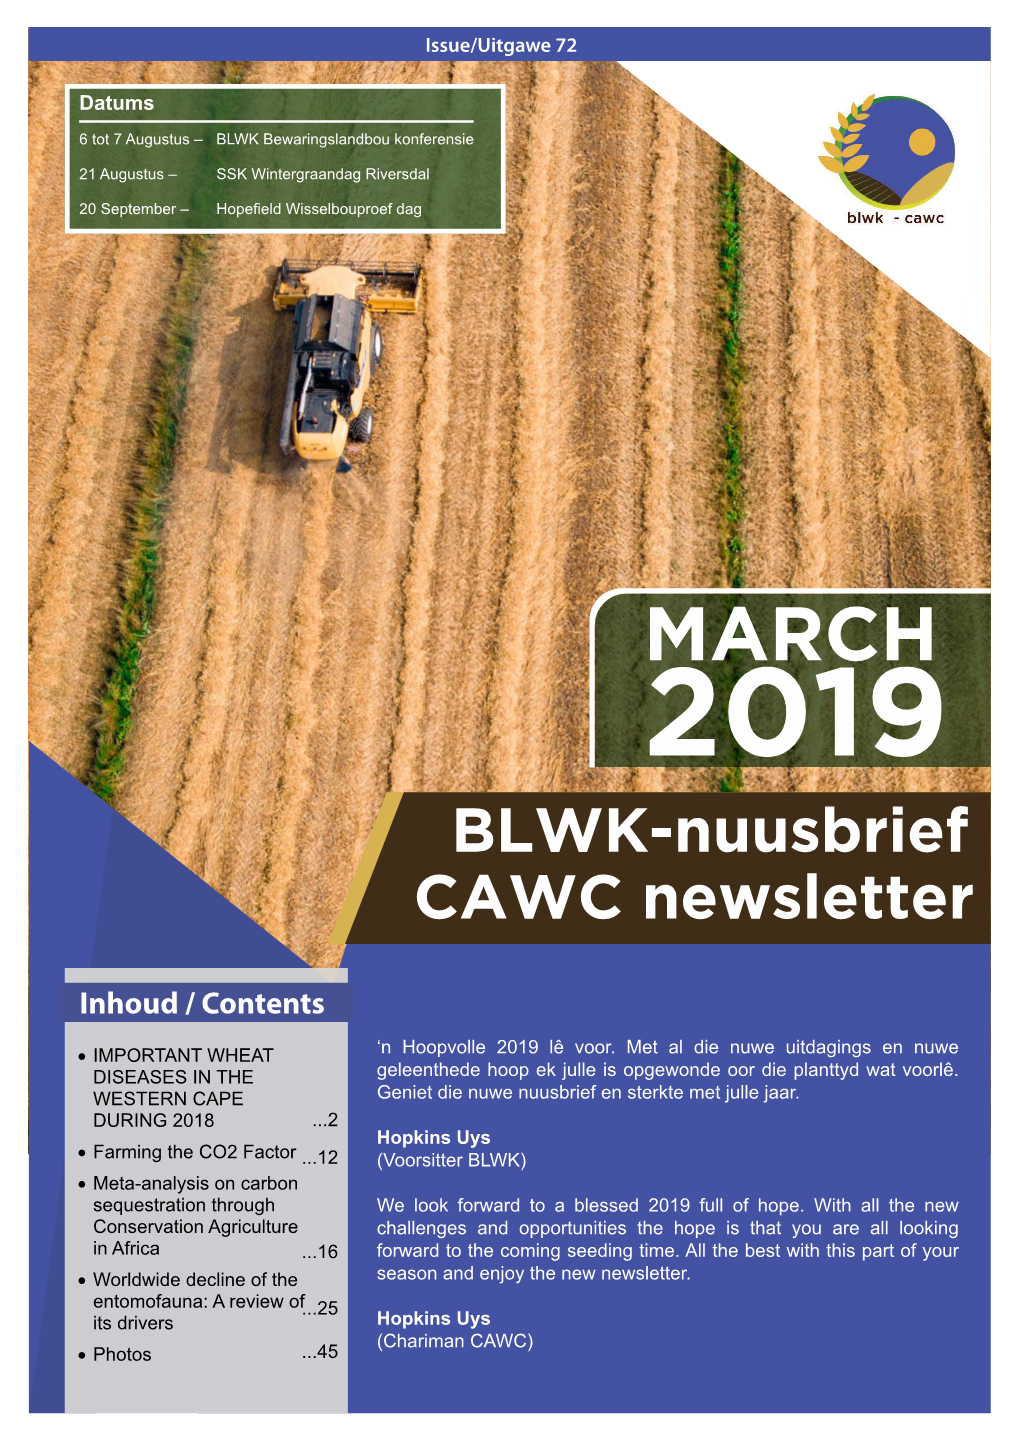 BLWK-Nuusbrief CAWC Newsletter